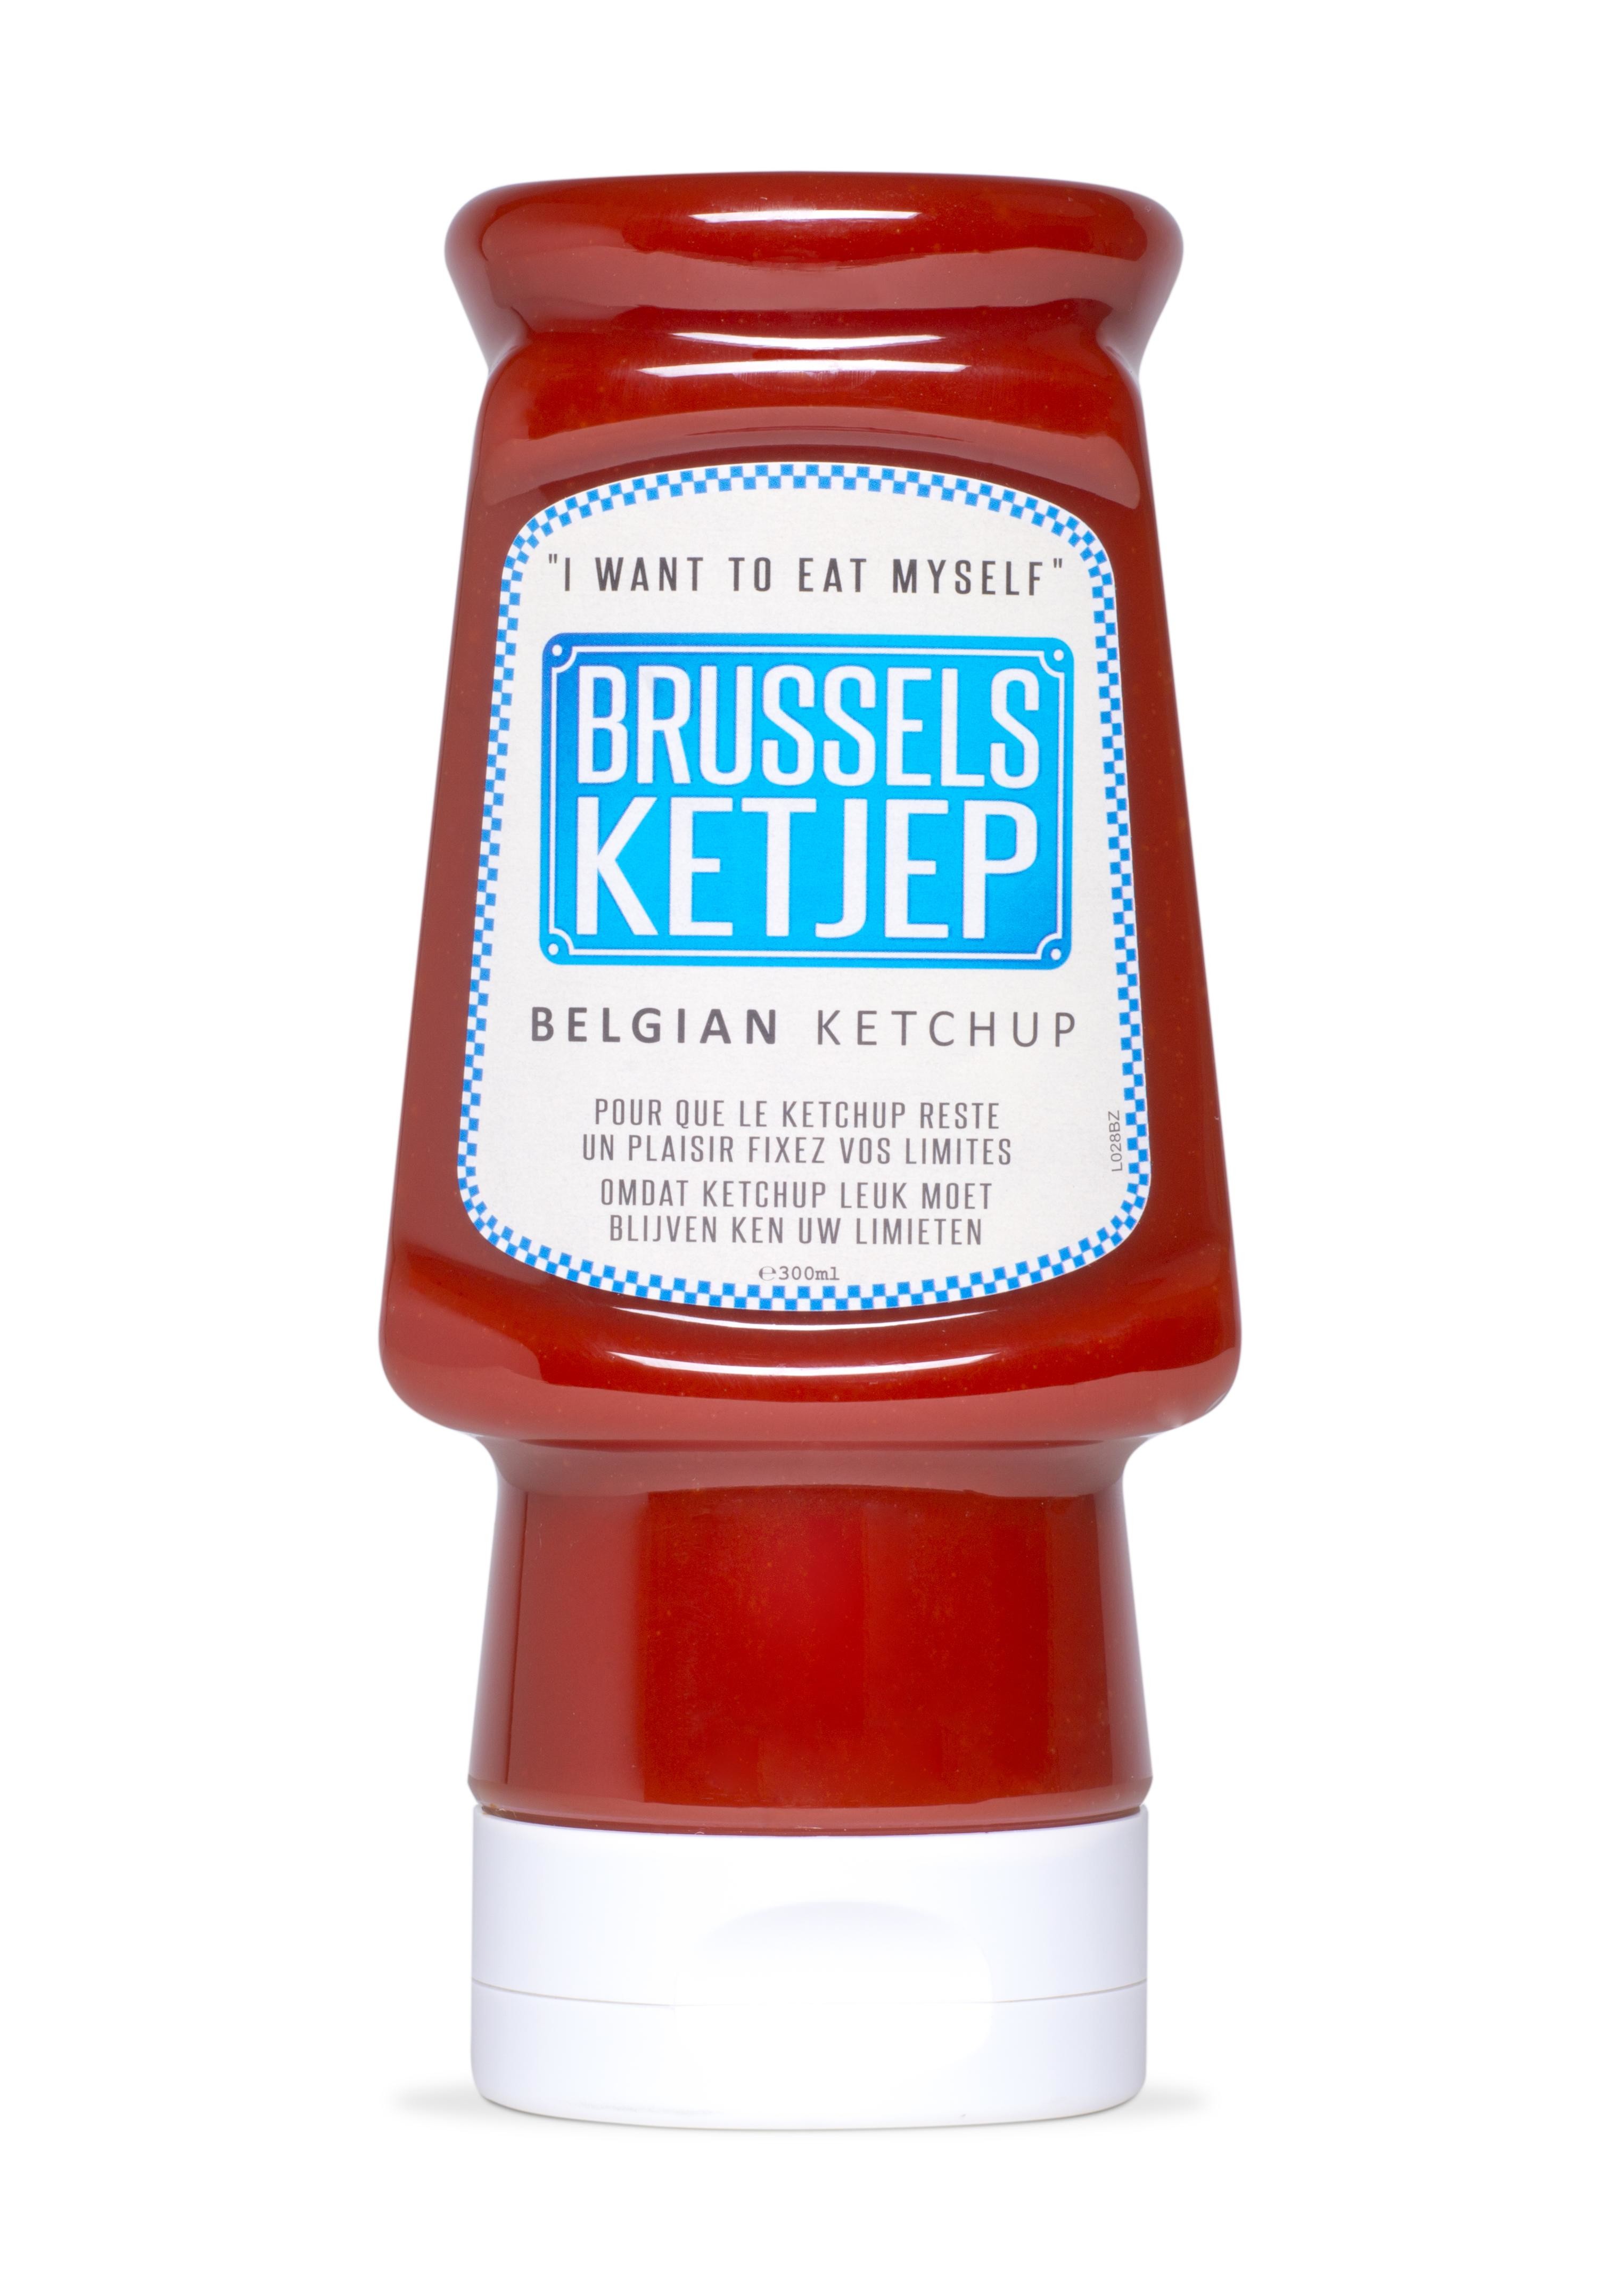 Tomaten Ketchup Brussels Ketjep 300ml knijpfles